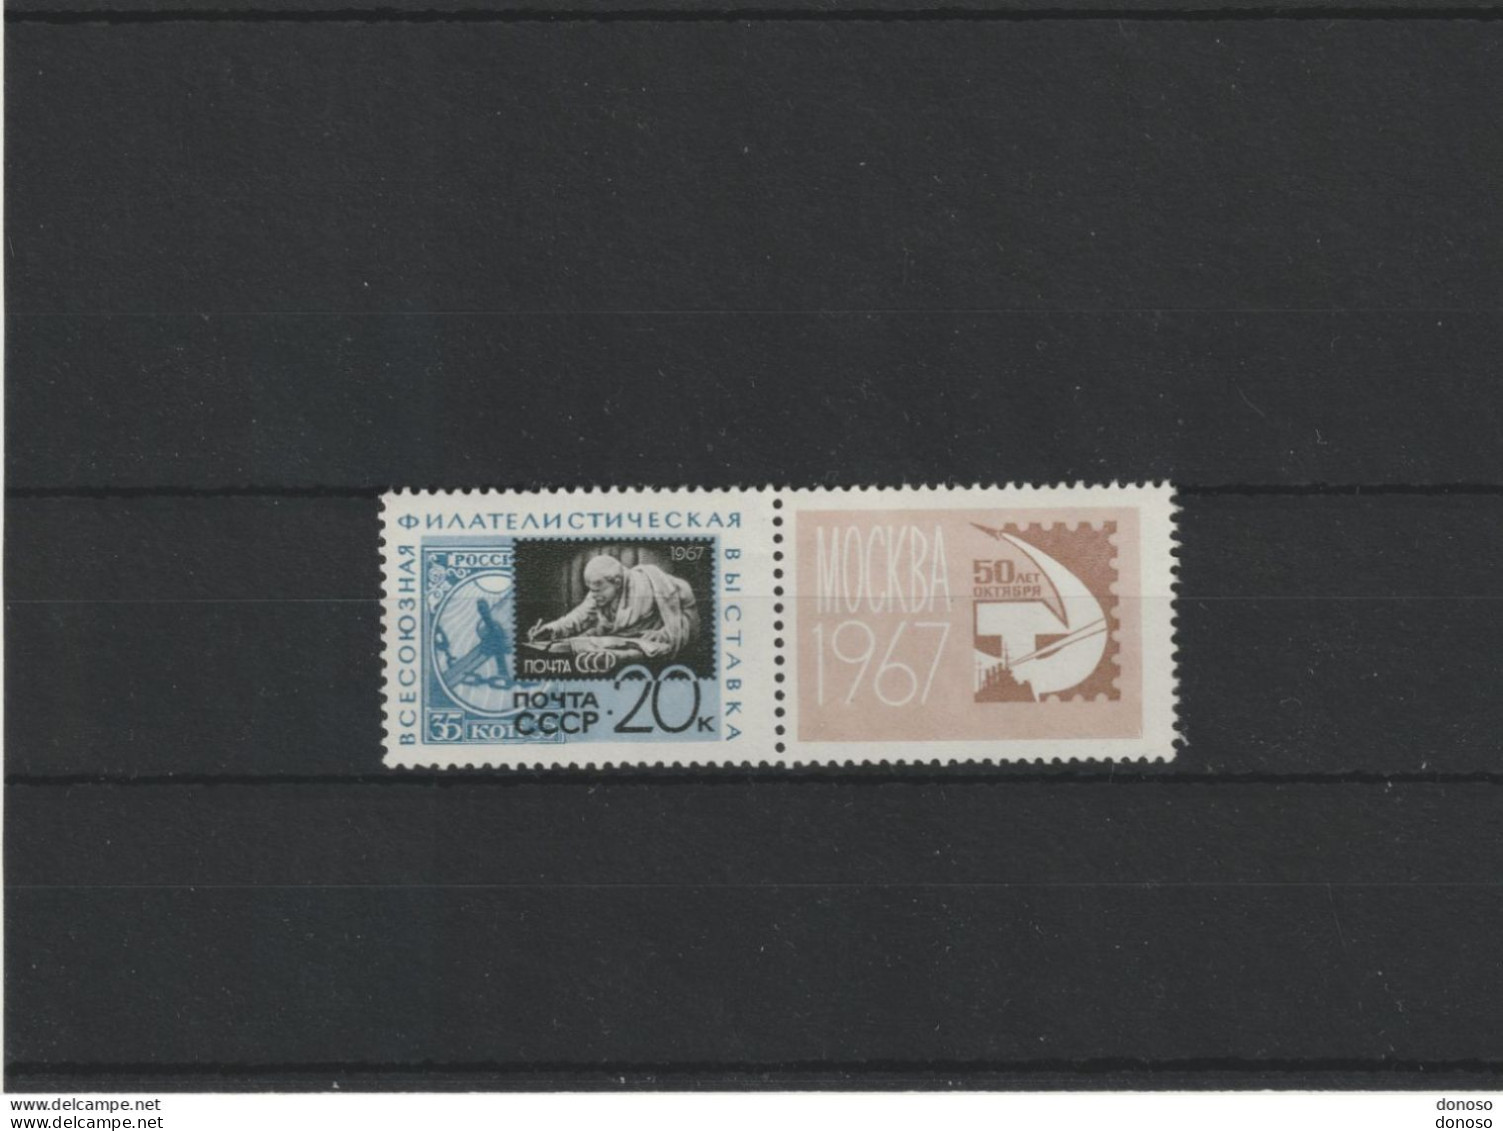 URSS 1967 REVOLUTION OCTOBRE Yvert 3232 NEUF ** MNH - Unused Stamps